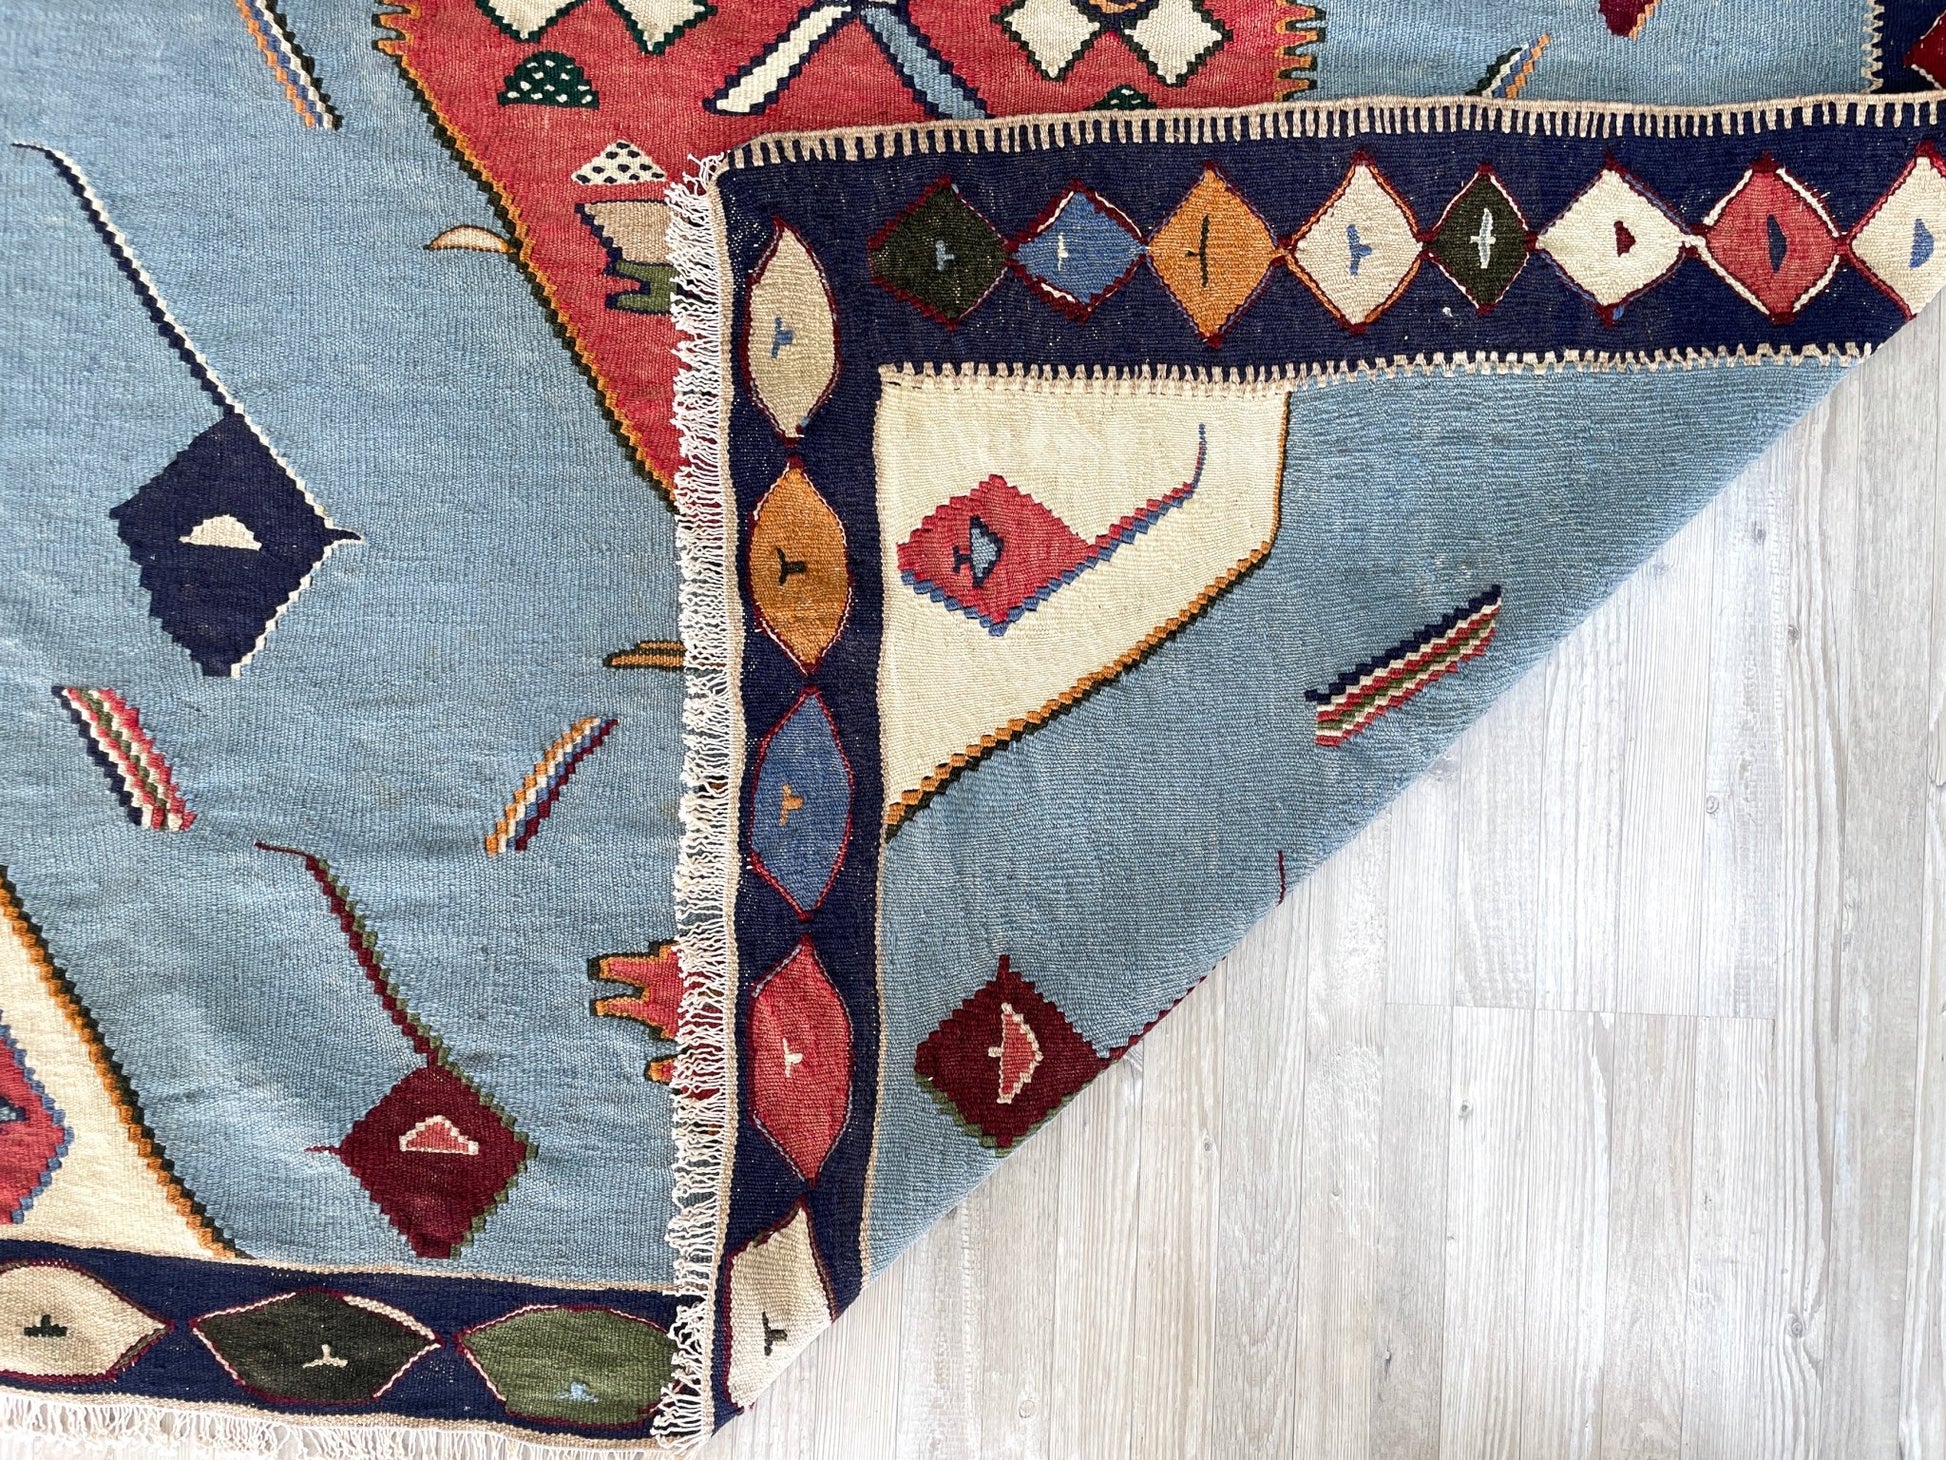 Small blue persian senneh kilim rug. Kilim rug shop san francisco bay area